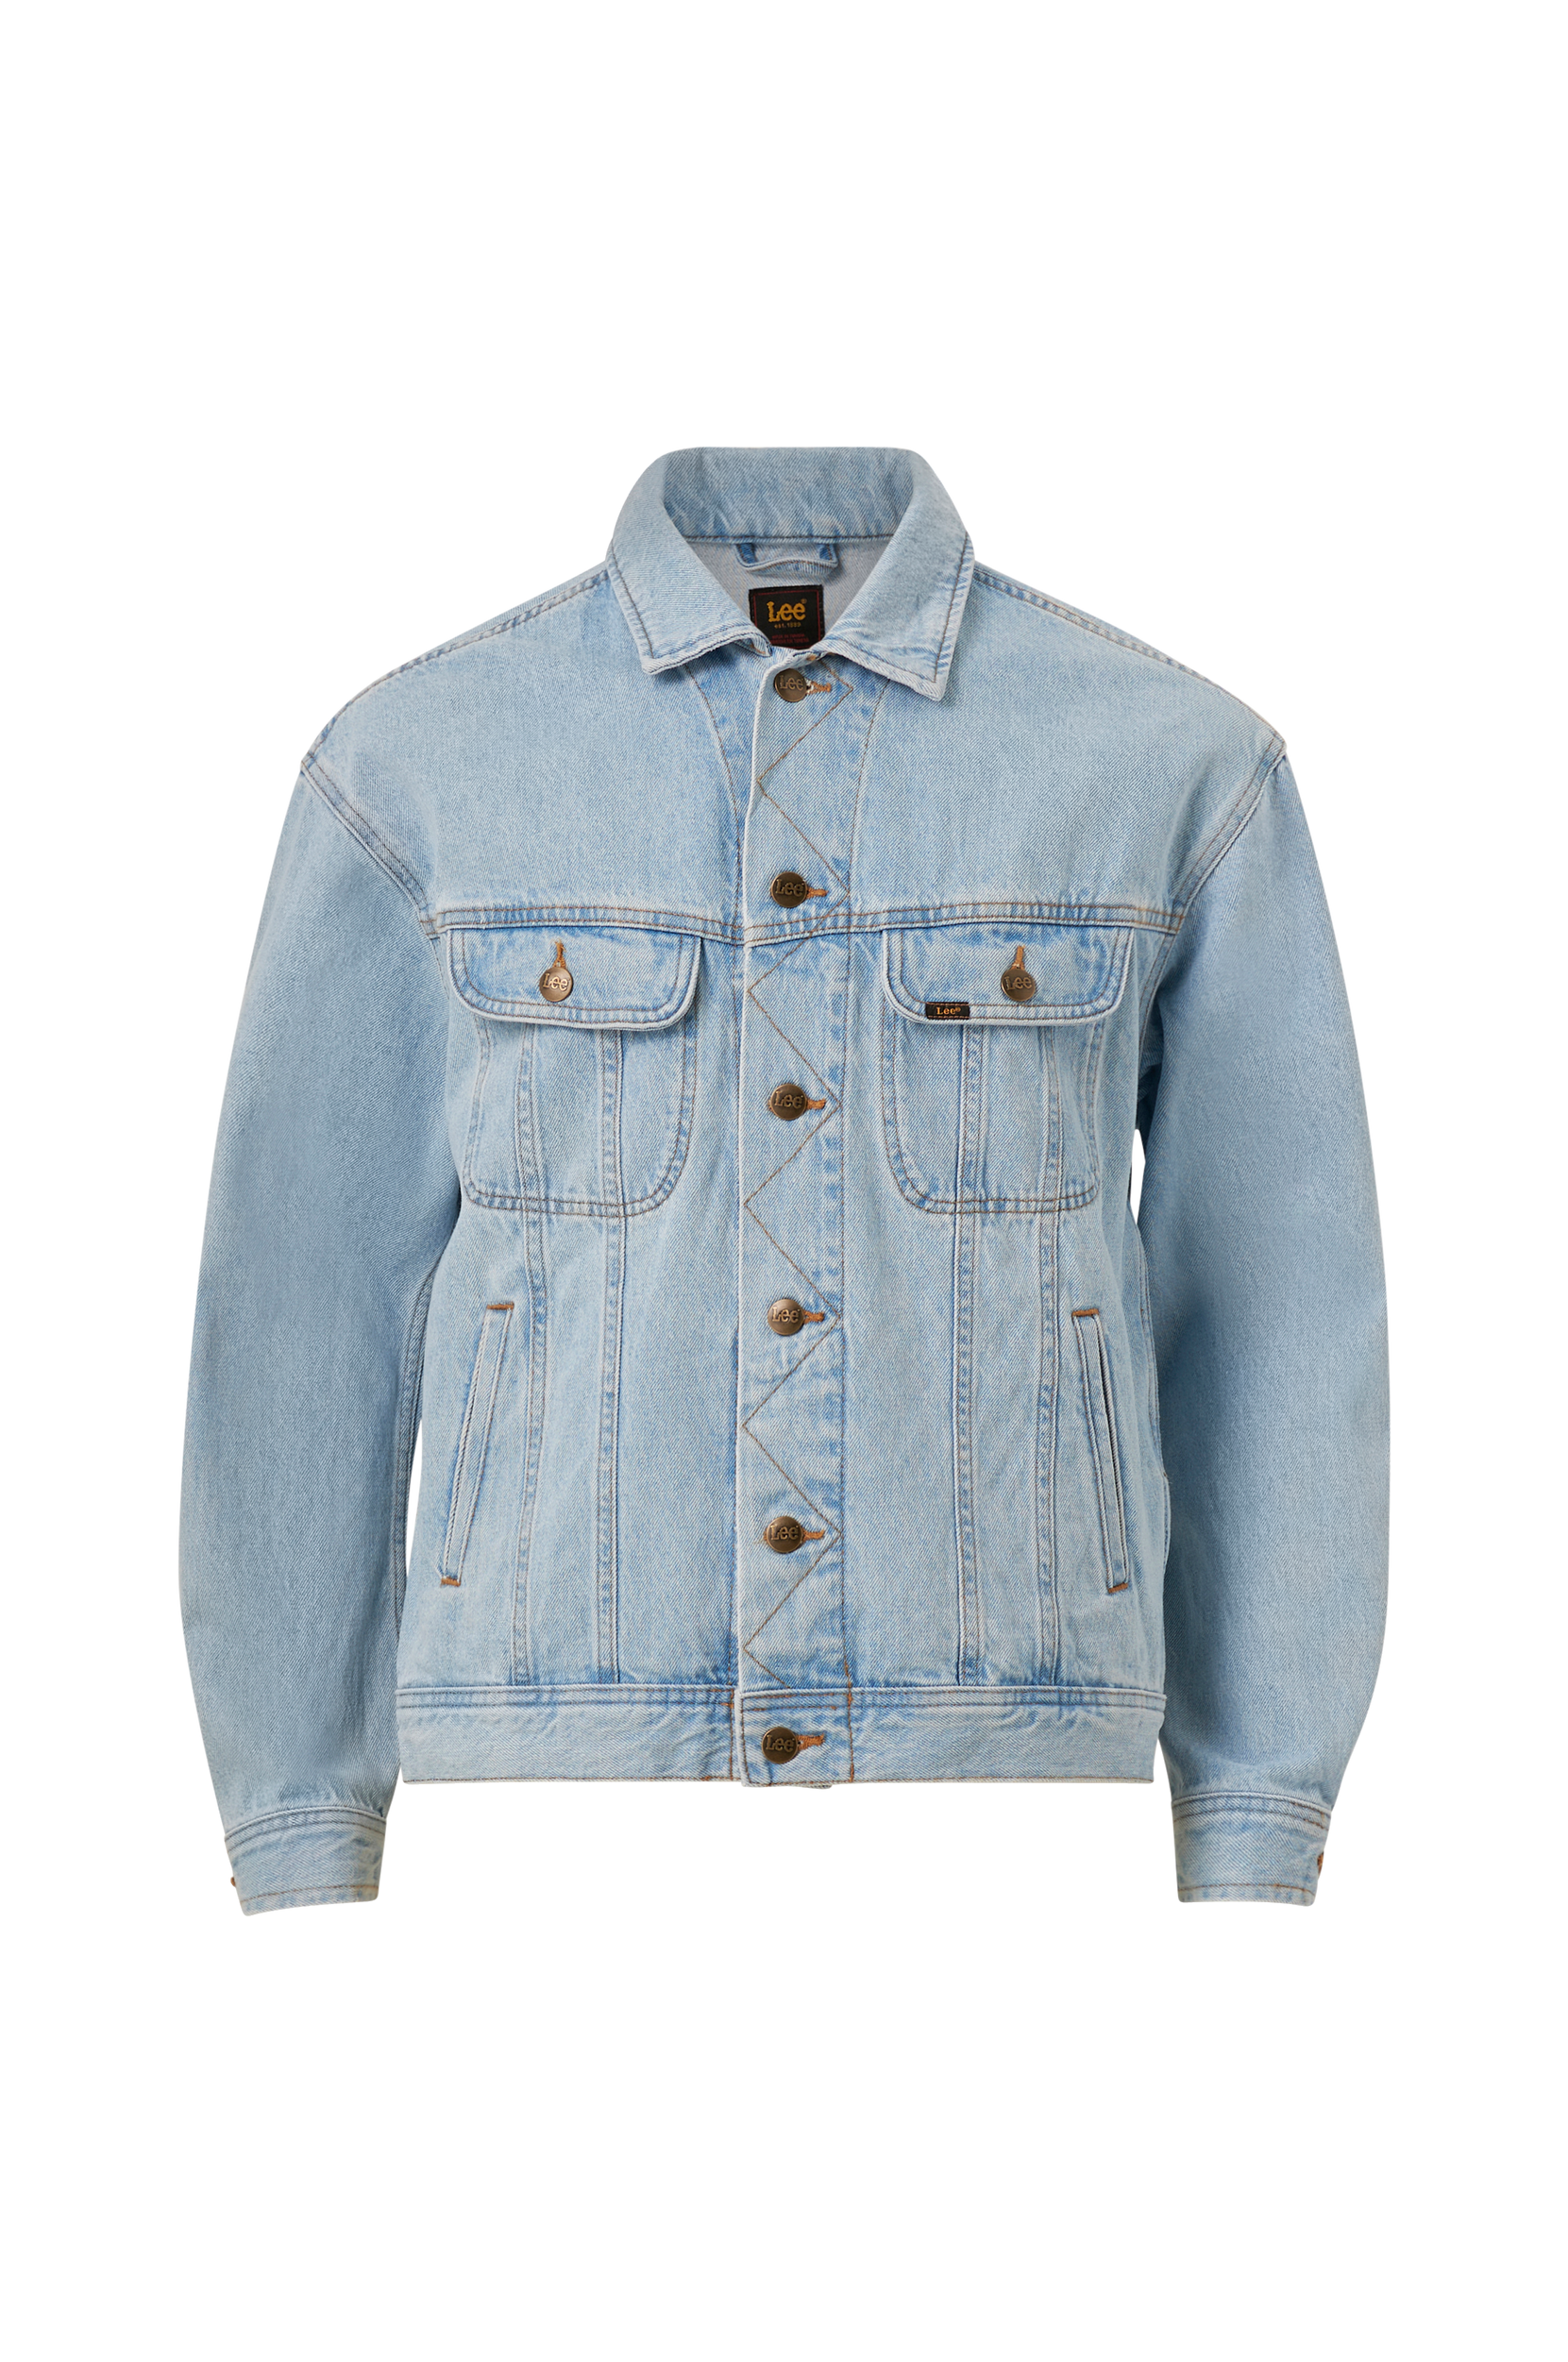 - Cowboyjakke Classic Jacket - Blå S - Jakker - Tøj til mænd (29826668)